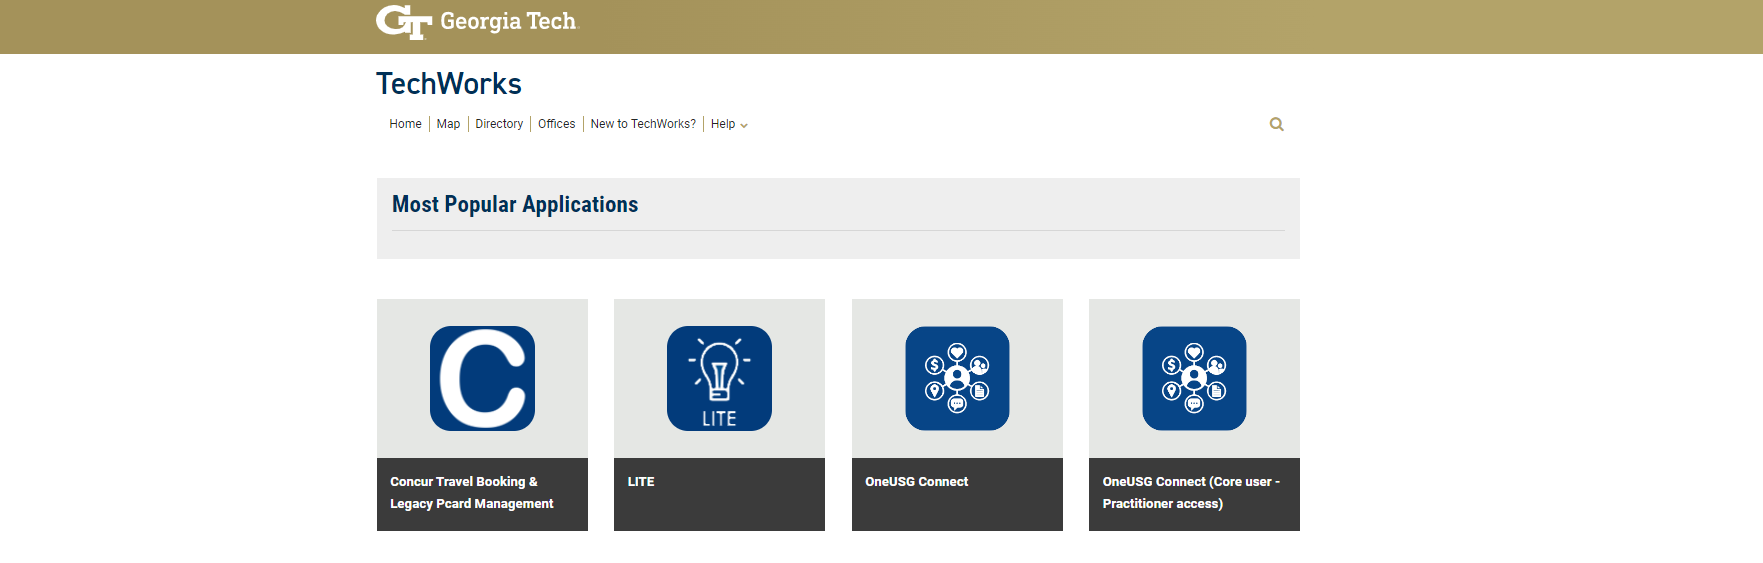 TechWorks website screen grab.